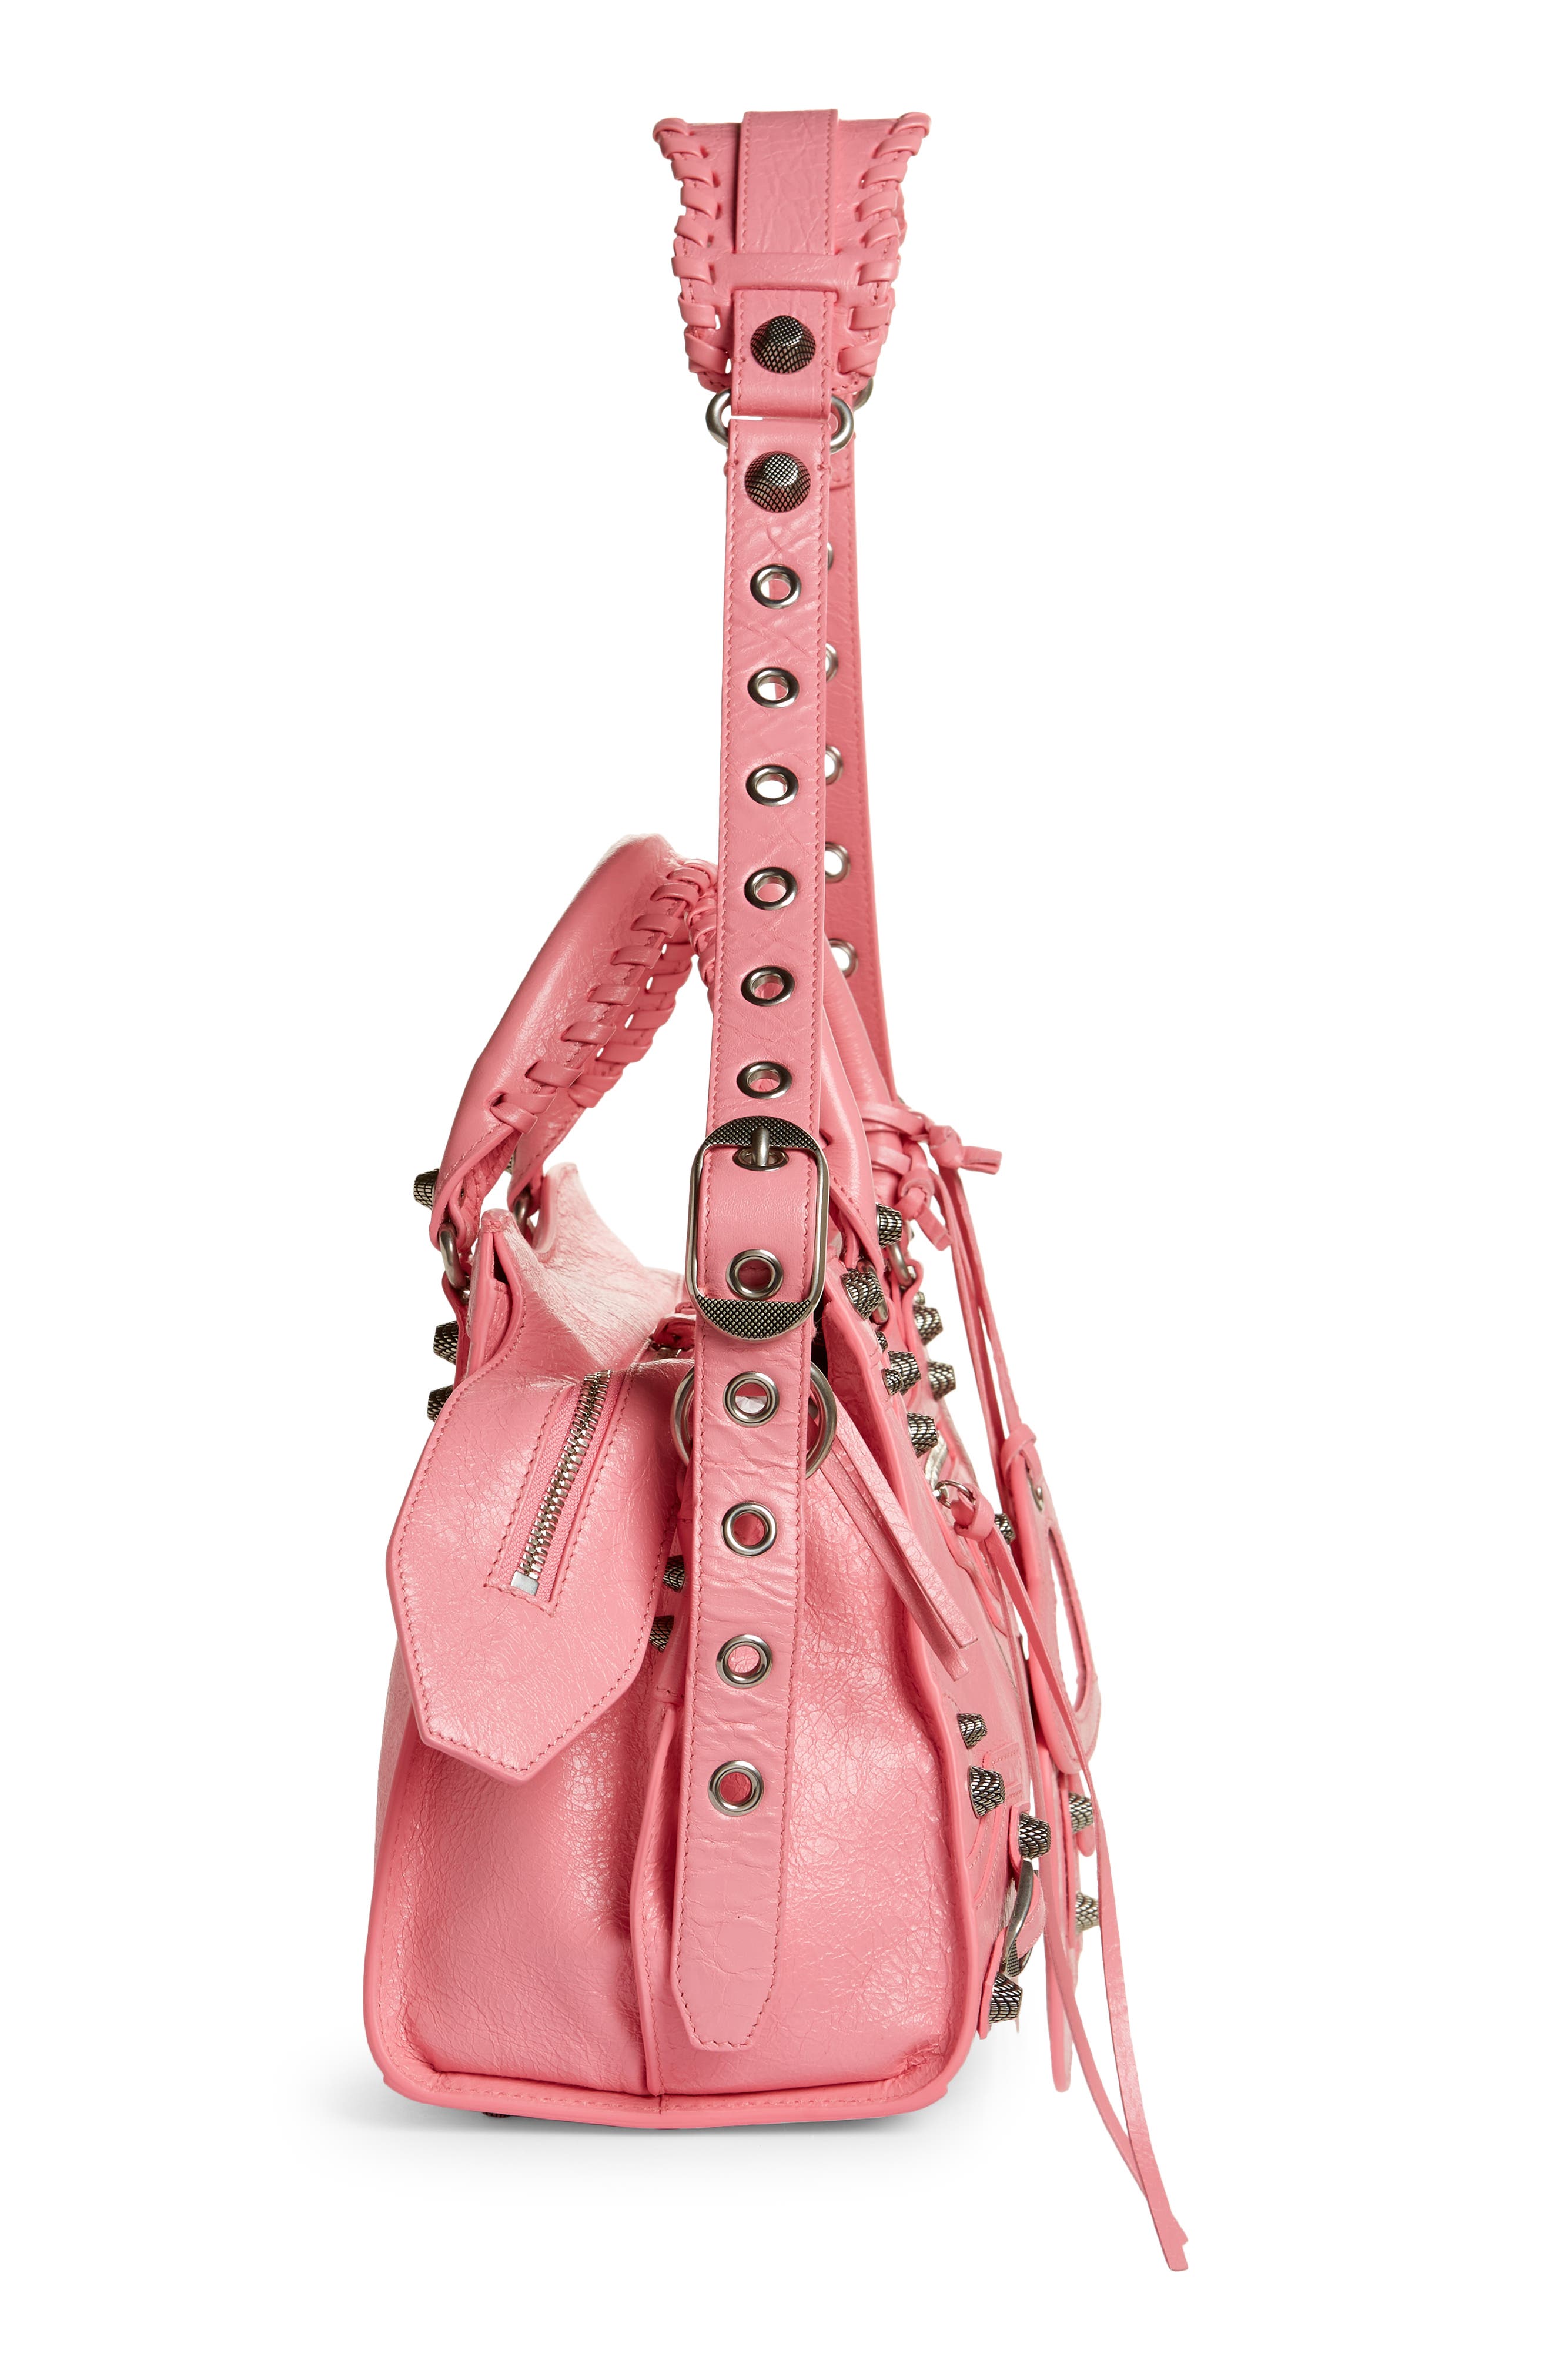 Balenciaga Neo Cagole Small Tote Bag - Pink